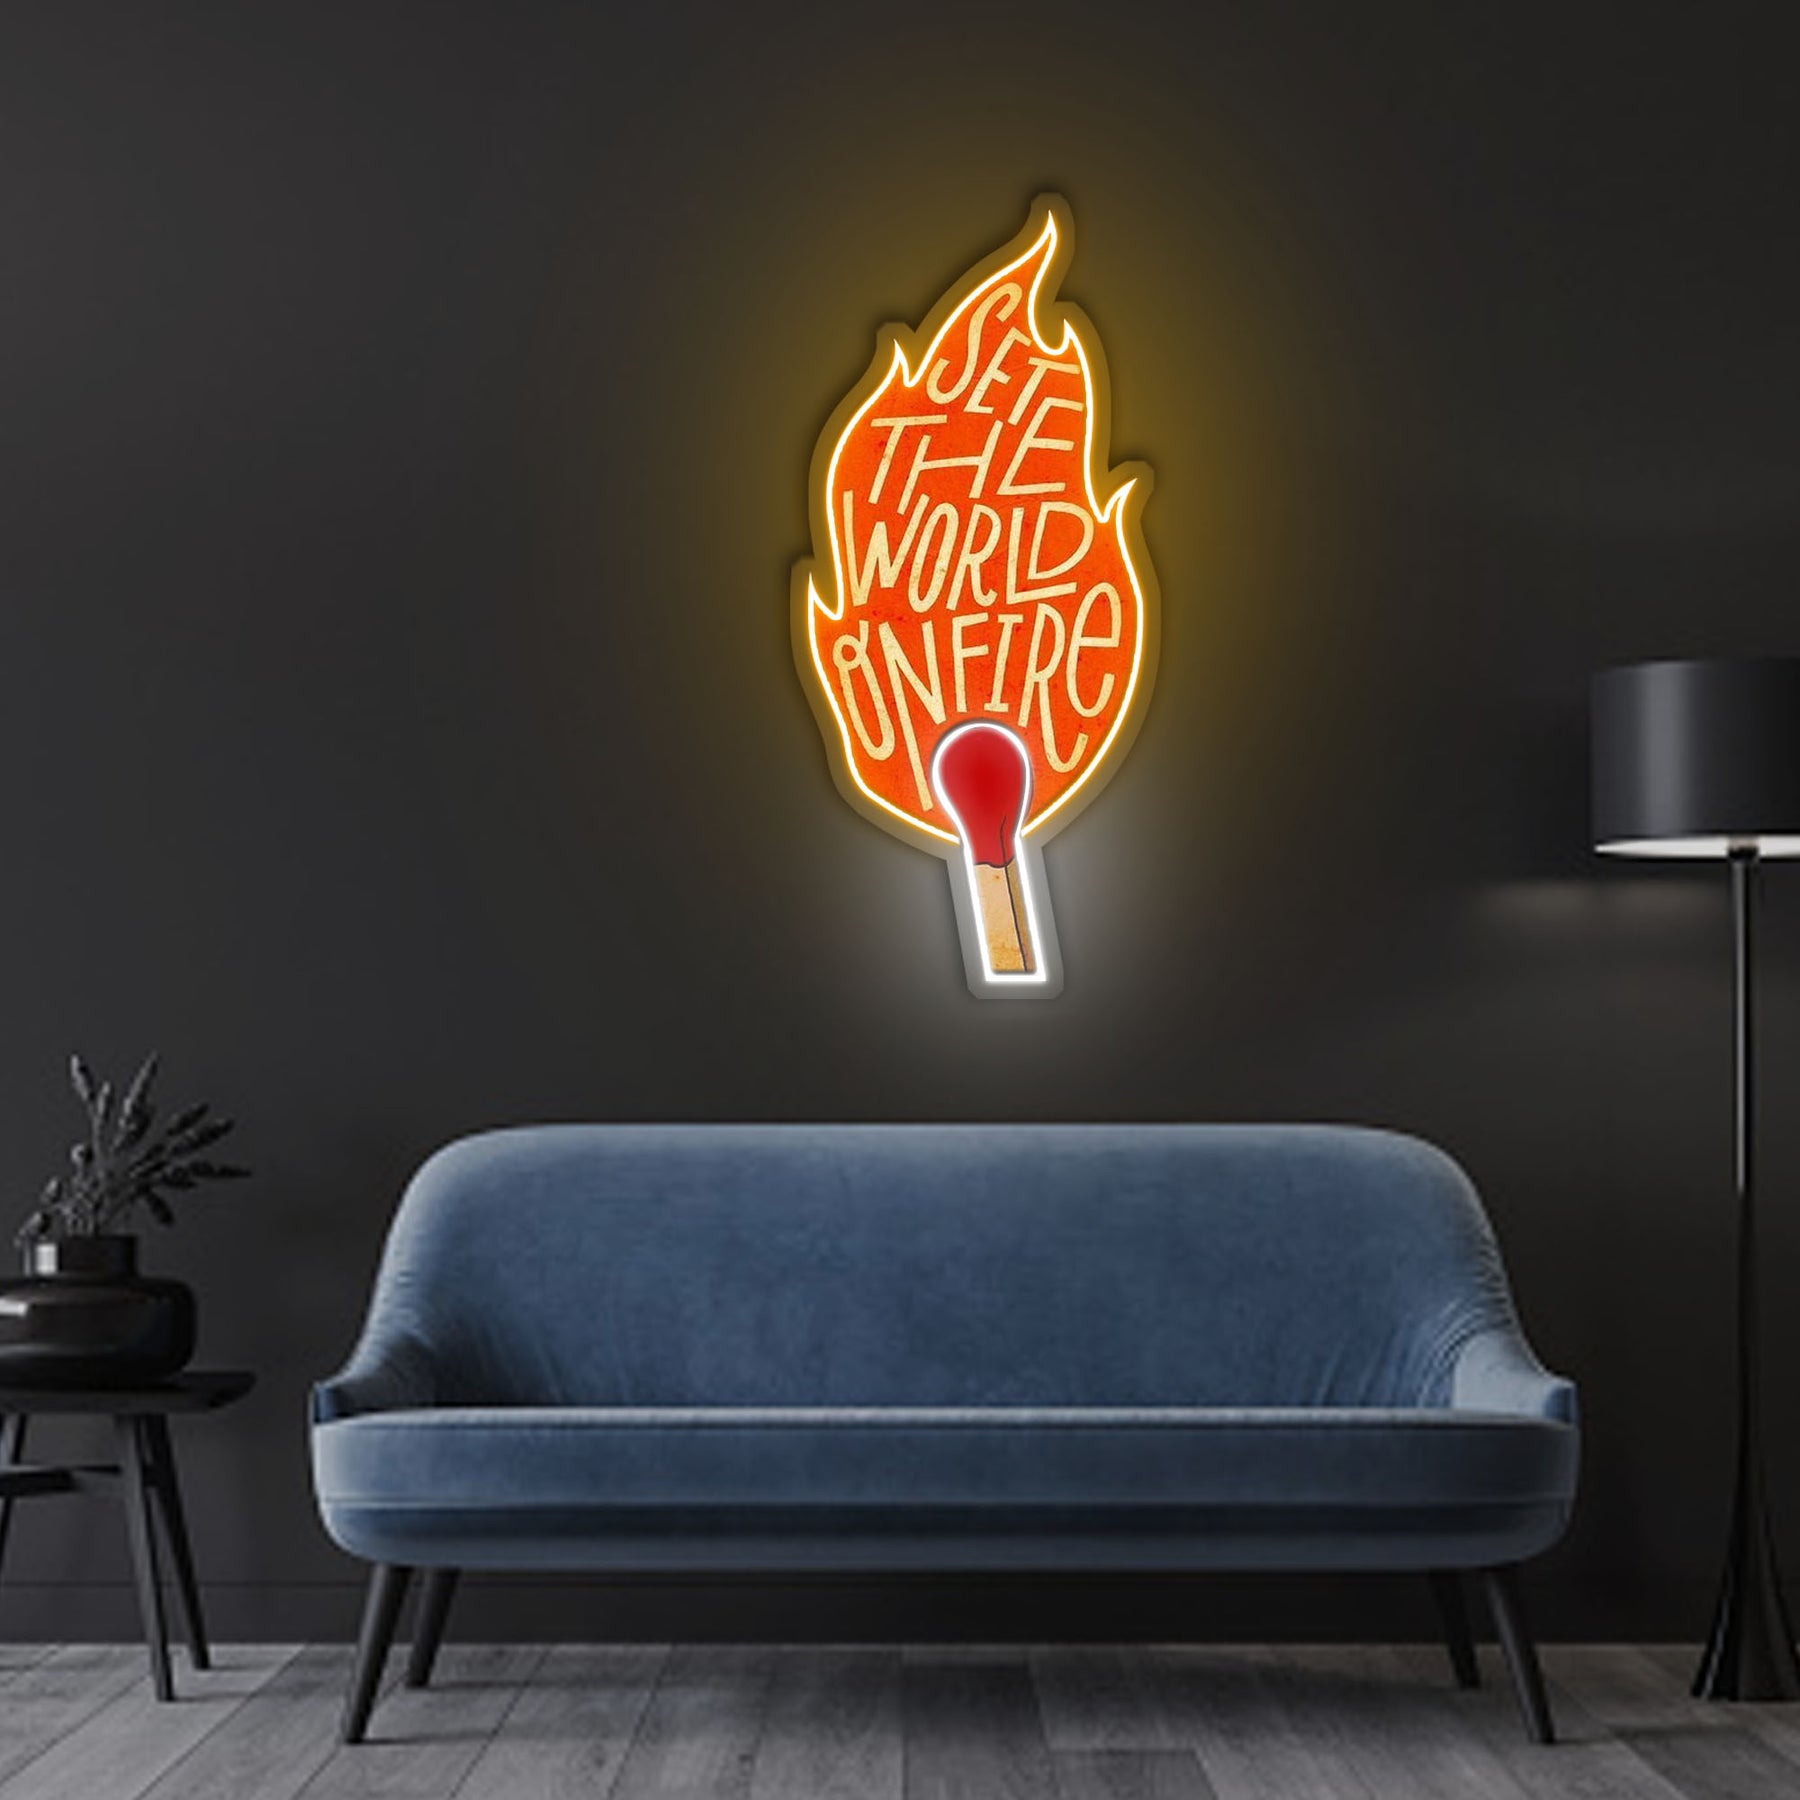 Set The World On Fire Neon Sign x Acrylic Artwork